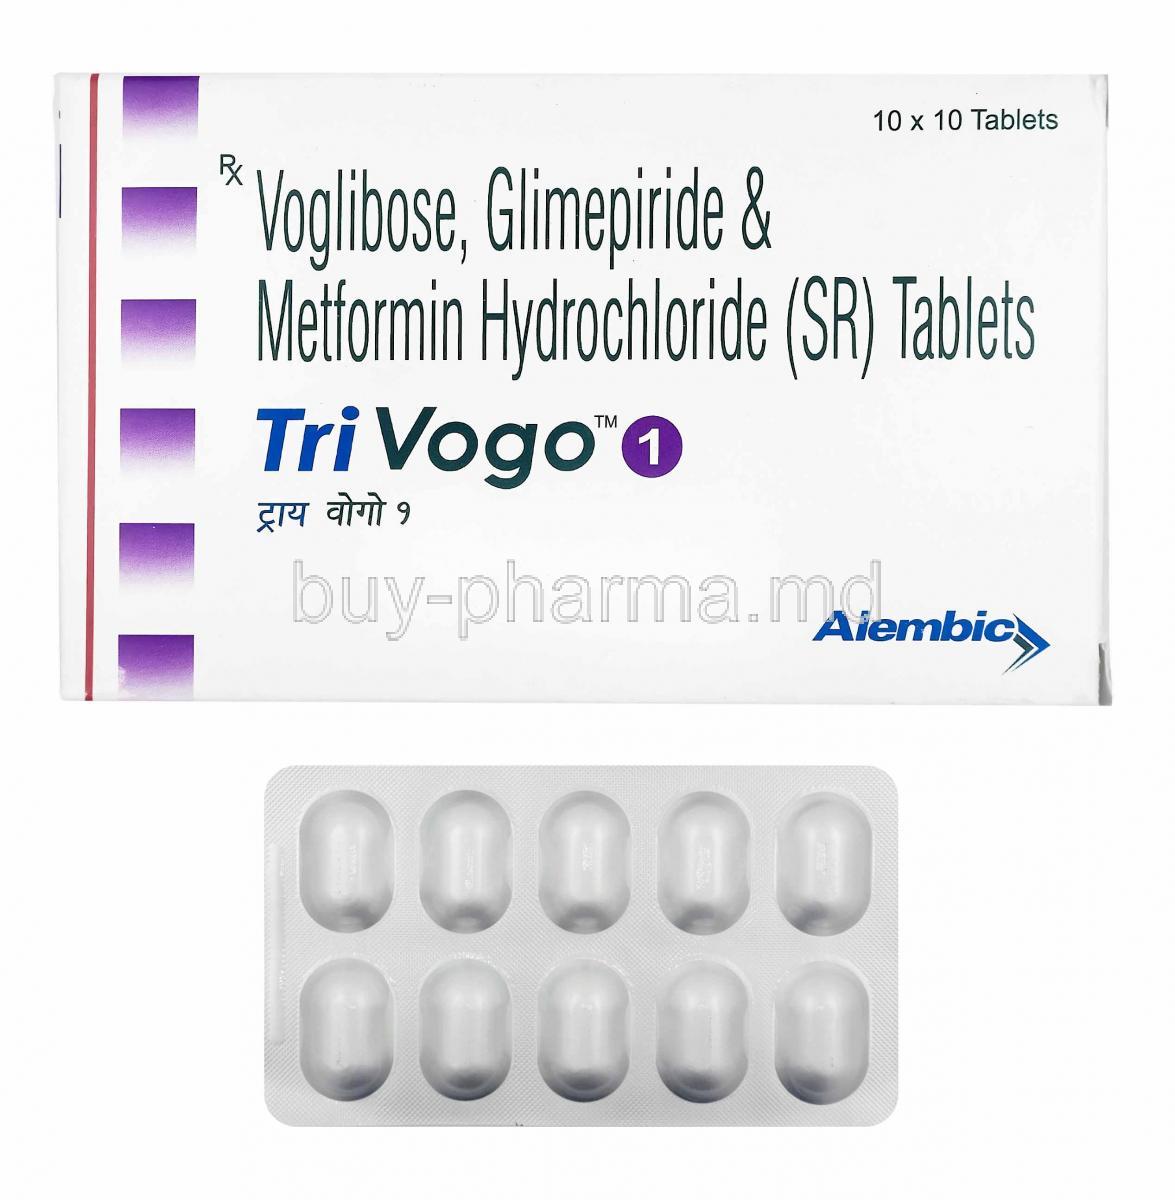 Trivogo, Glimepiride 1mg. Metformin 500mg and Voglibose 0.2mg box and tablets